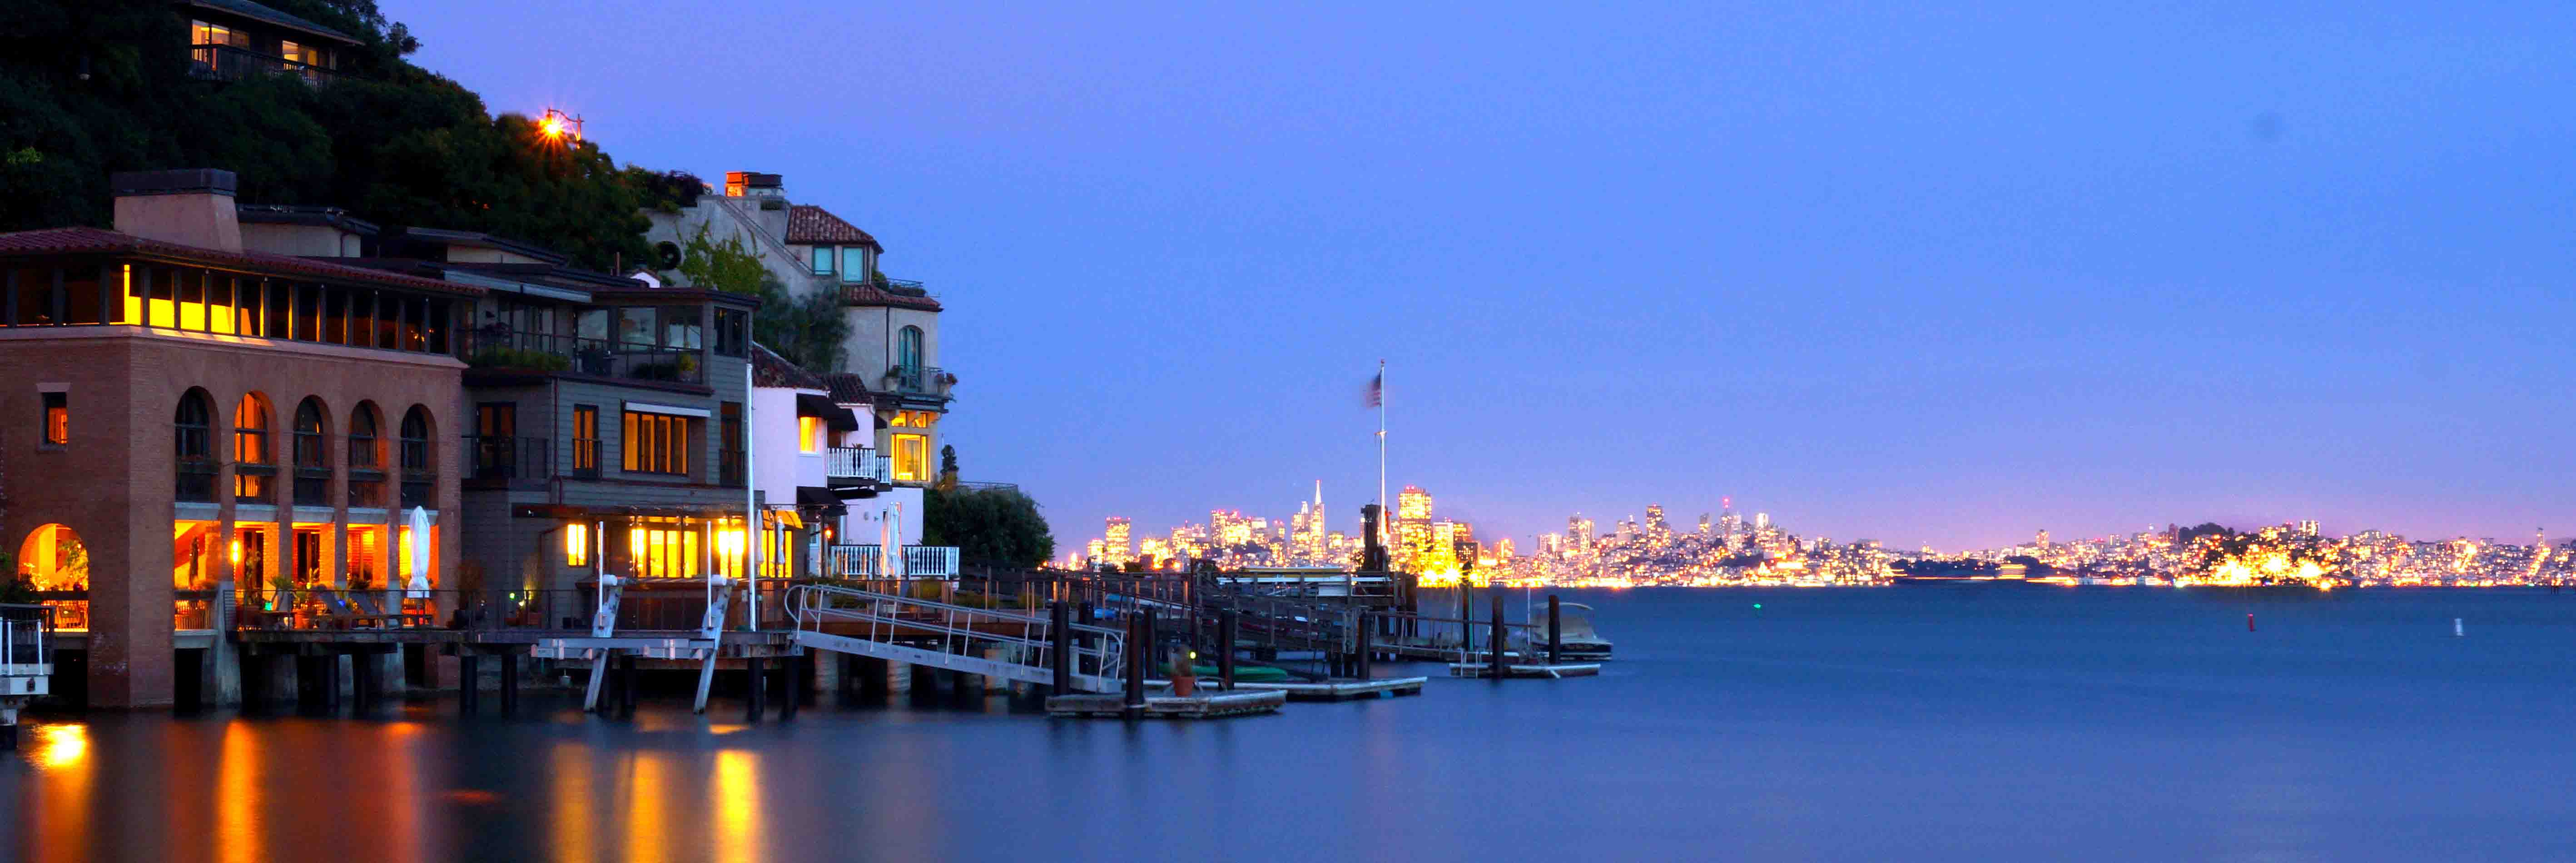 Night view of Corinthian Island and San Francisco skyline